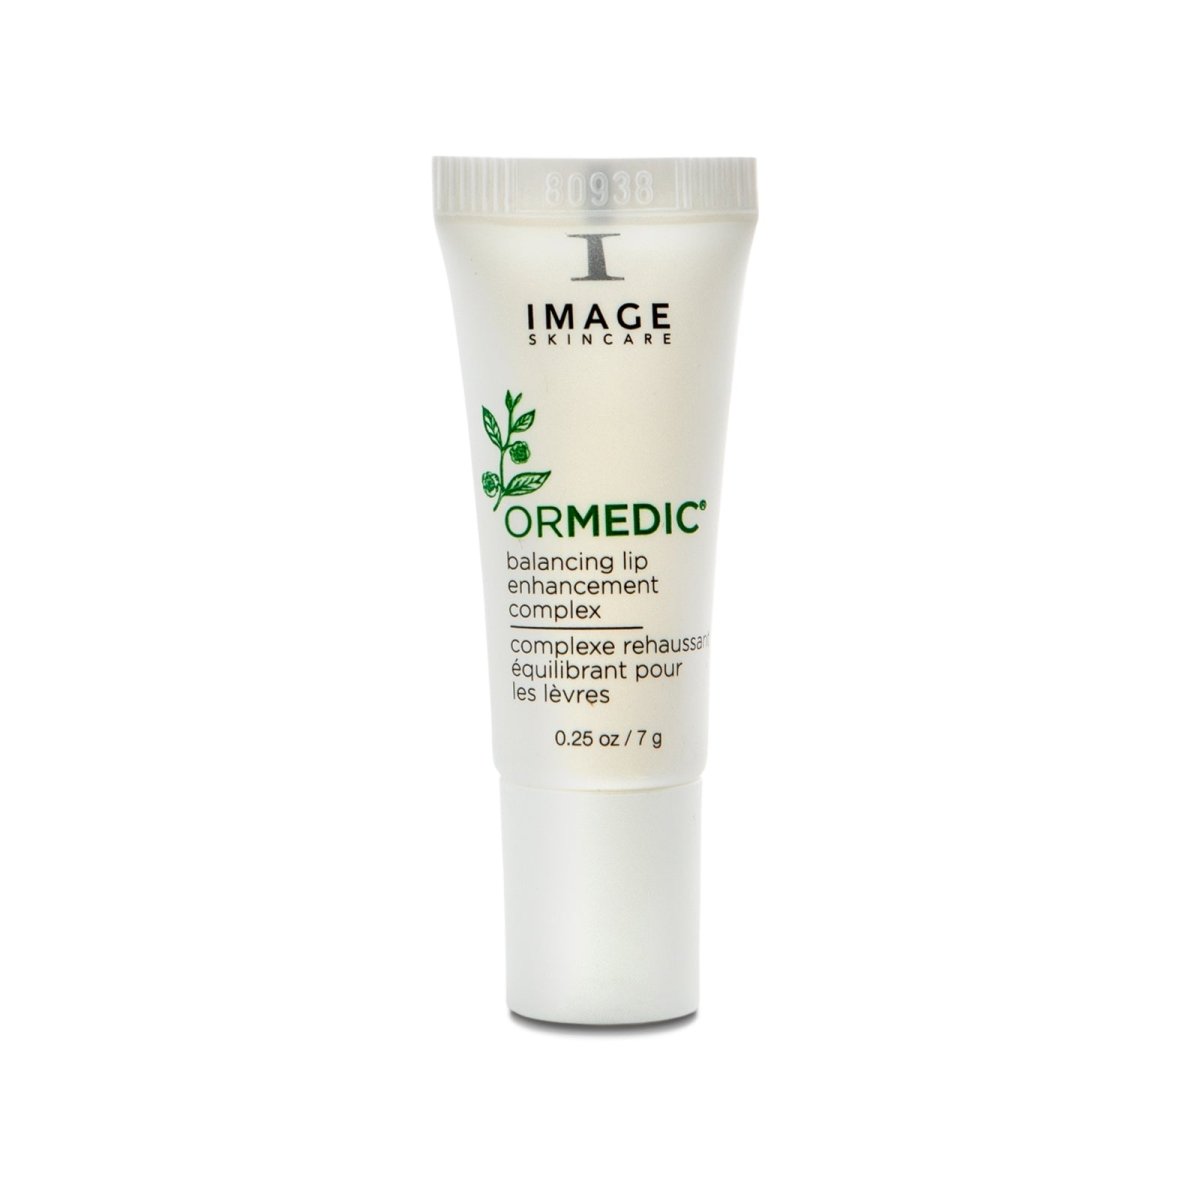 IMAGE Skincare ORMEDIC® Balancing Lip Enhancement Complex - SkincareEssentials